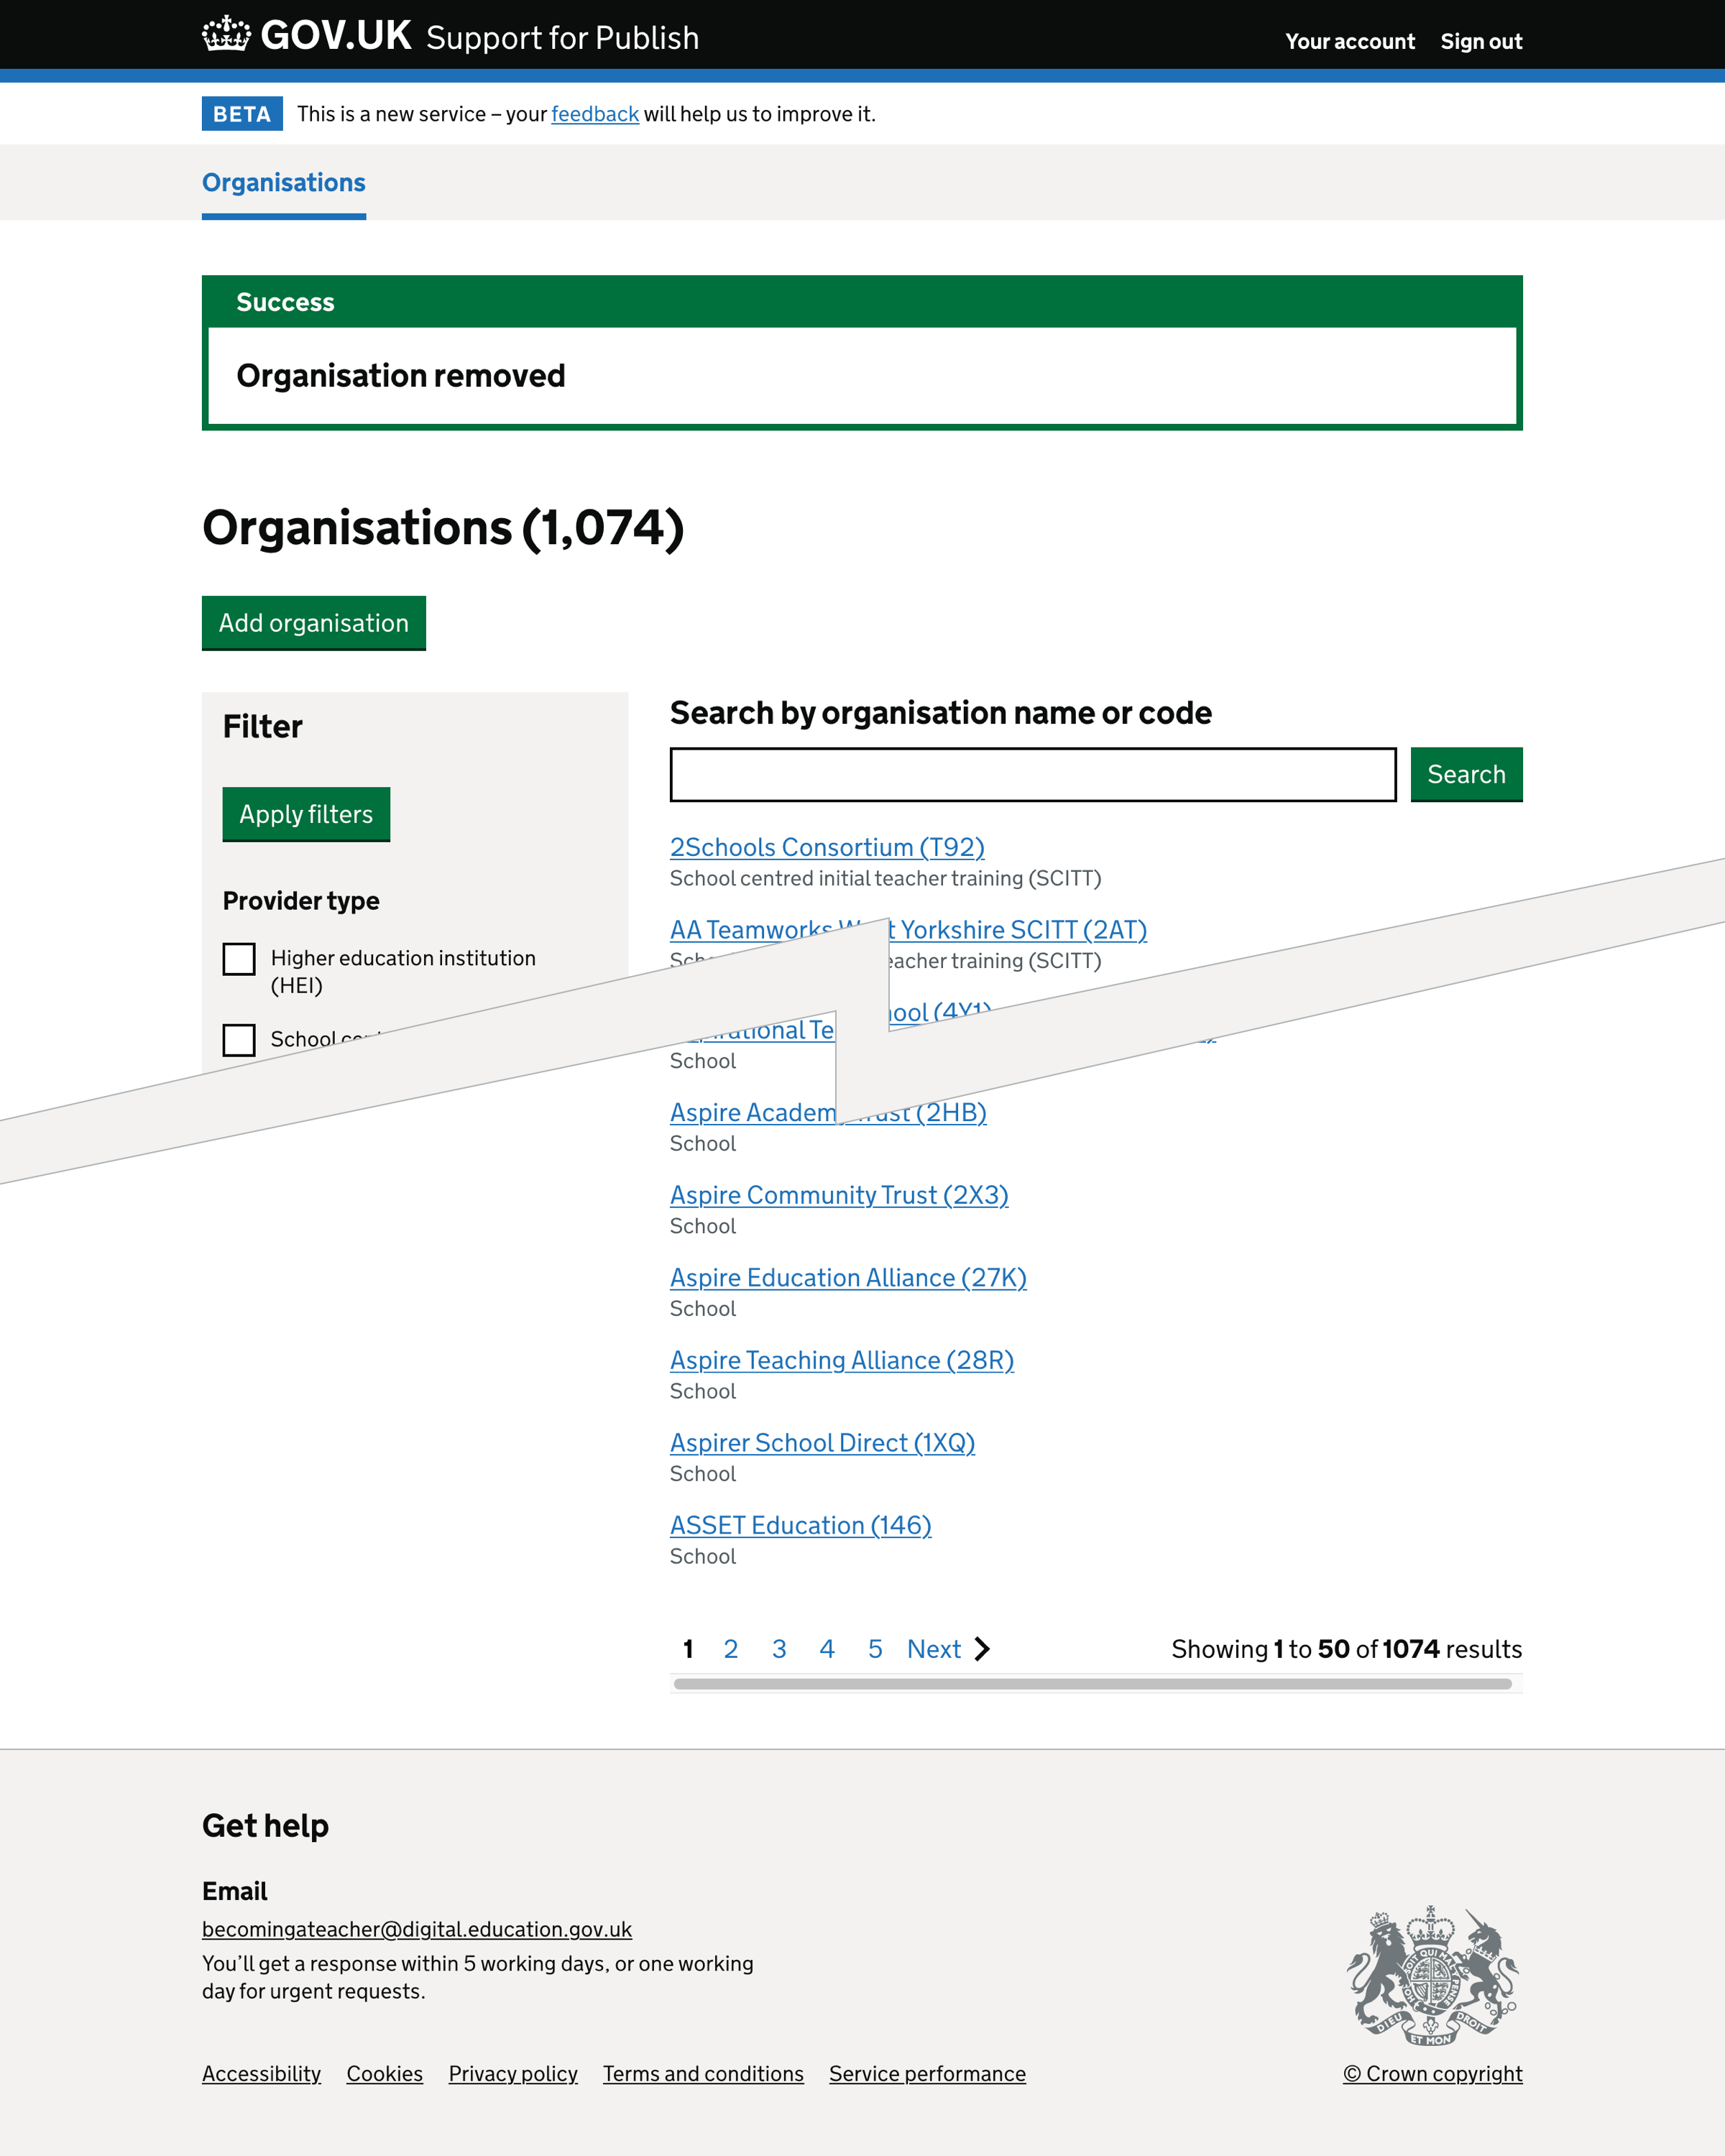 Screenshot of Organisation removed